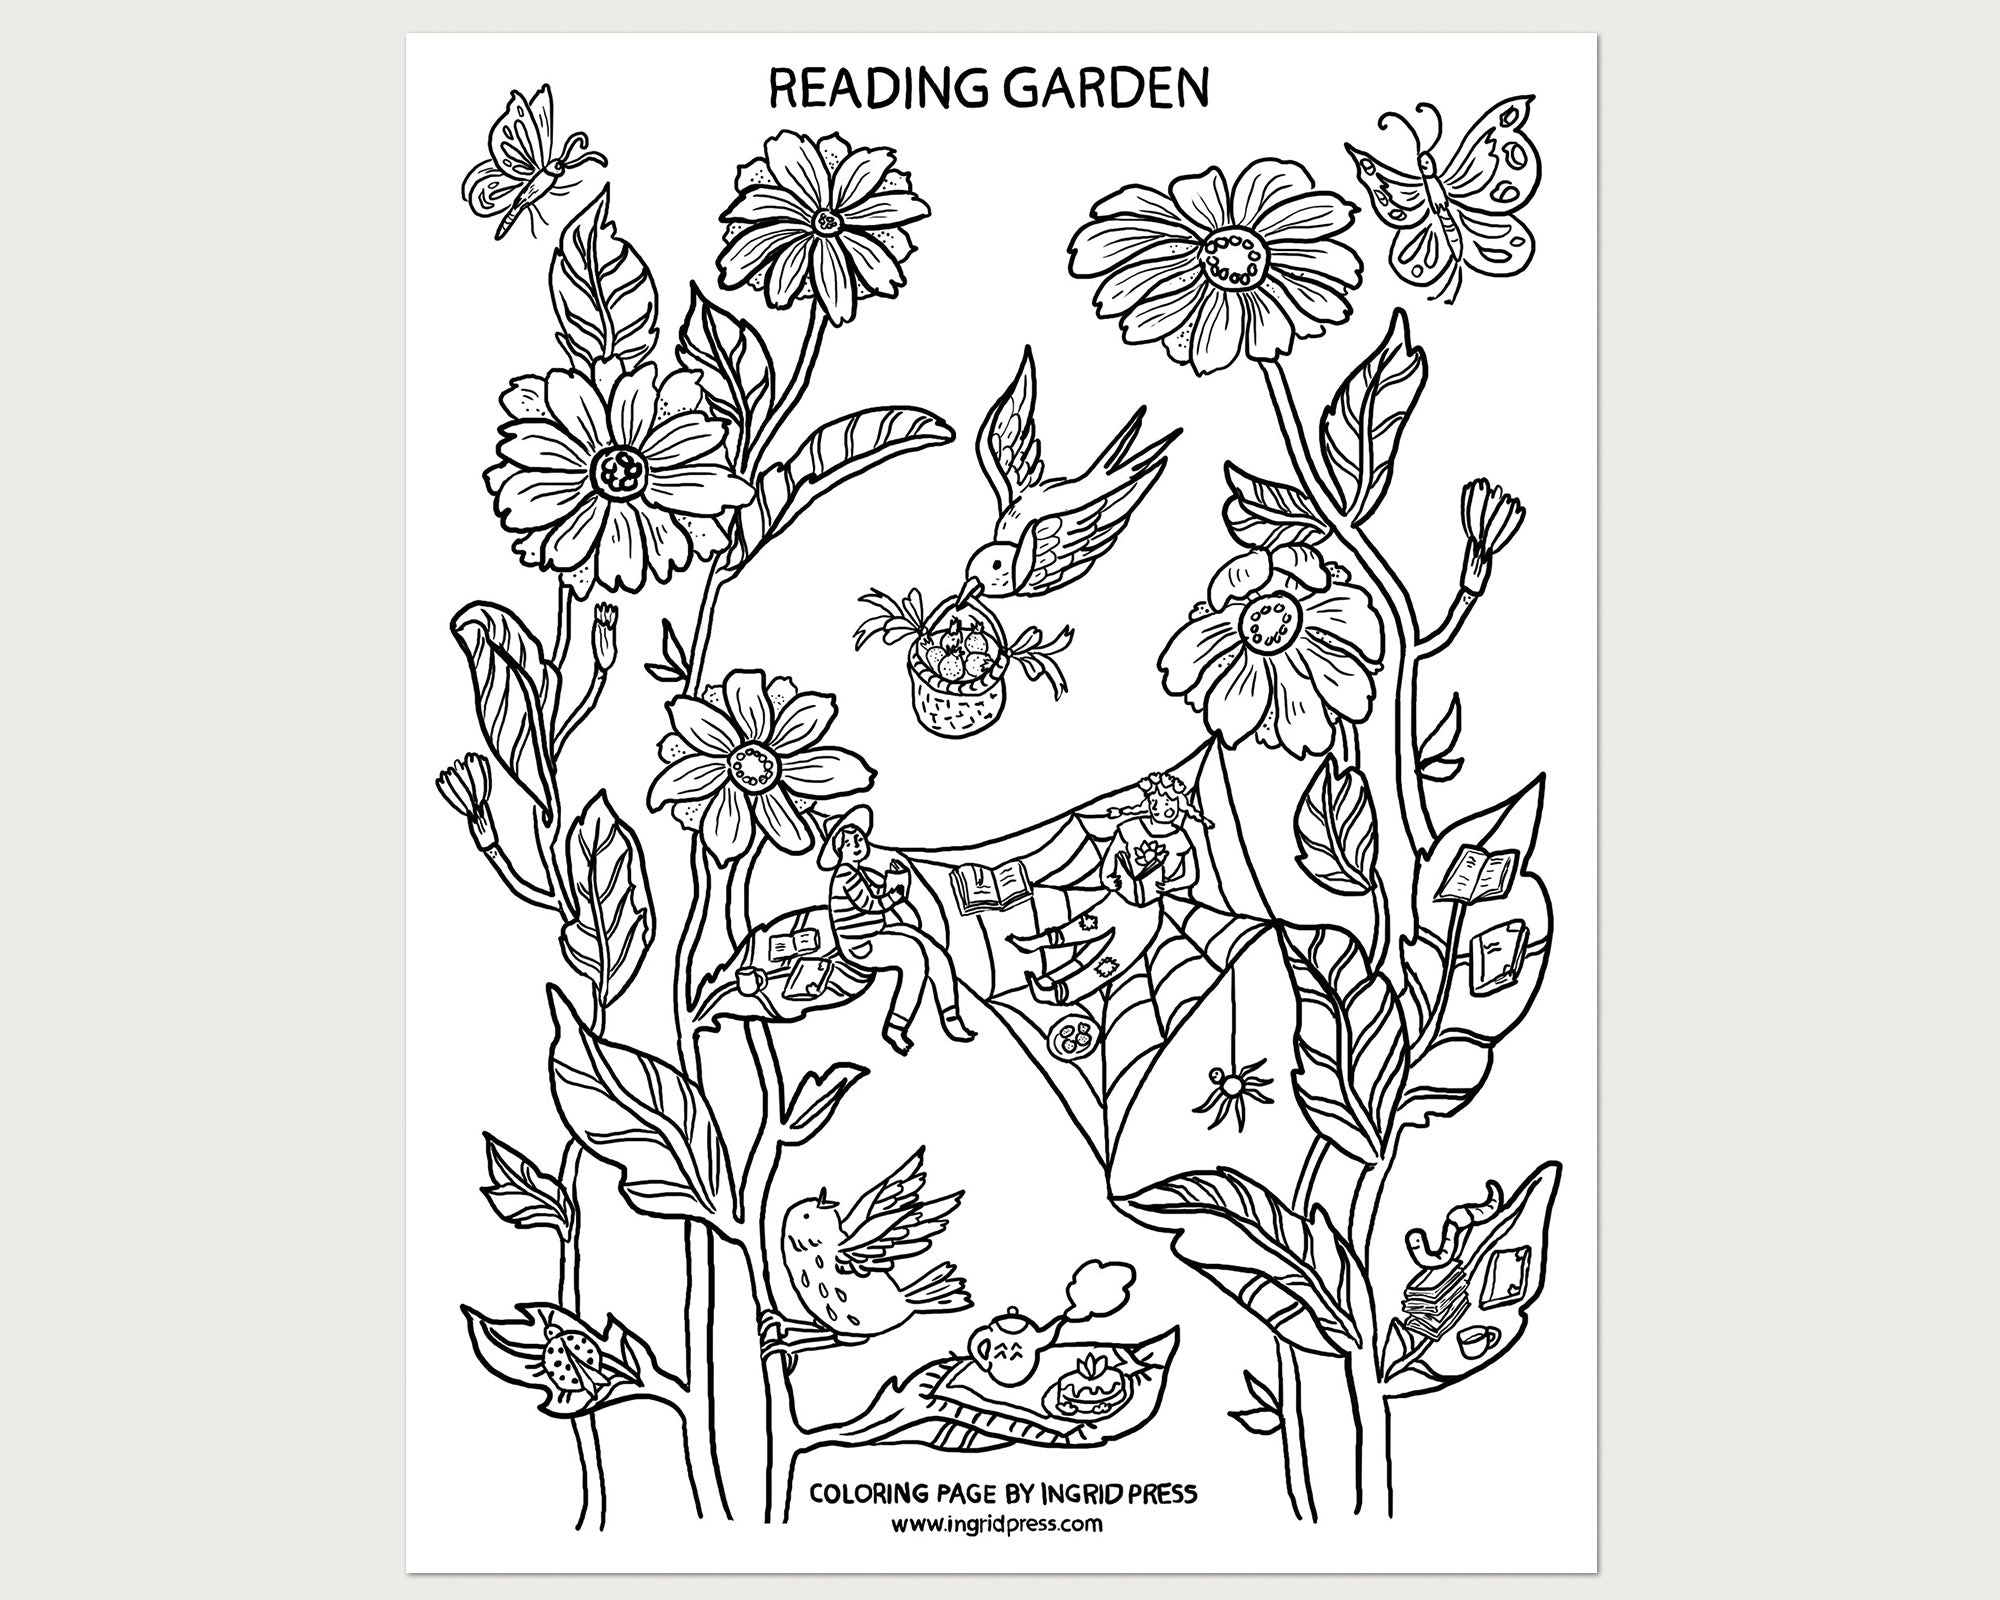 Reading garden coloring page â ingrid press